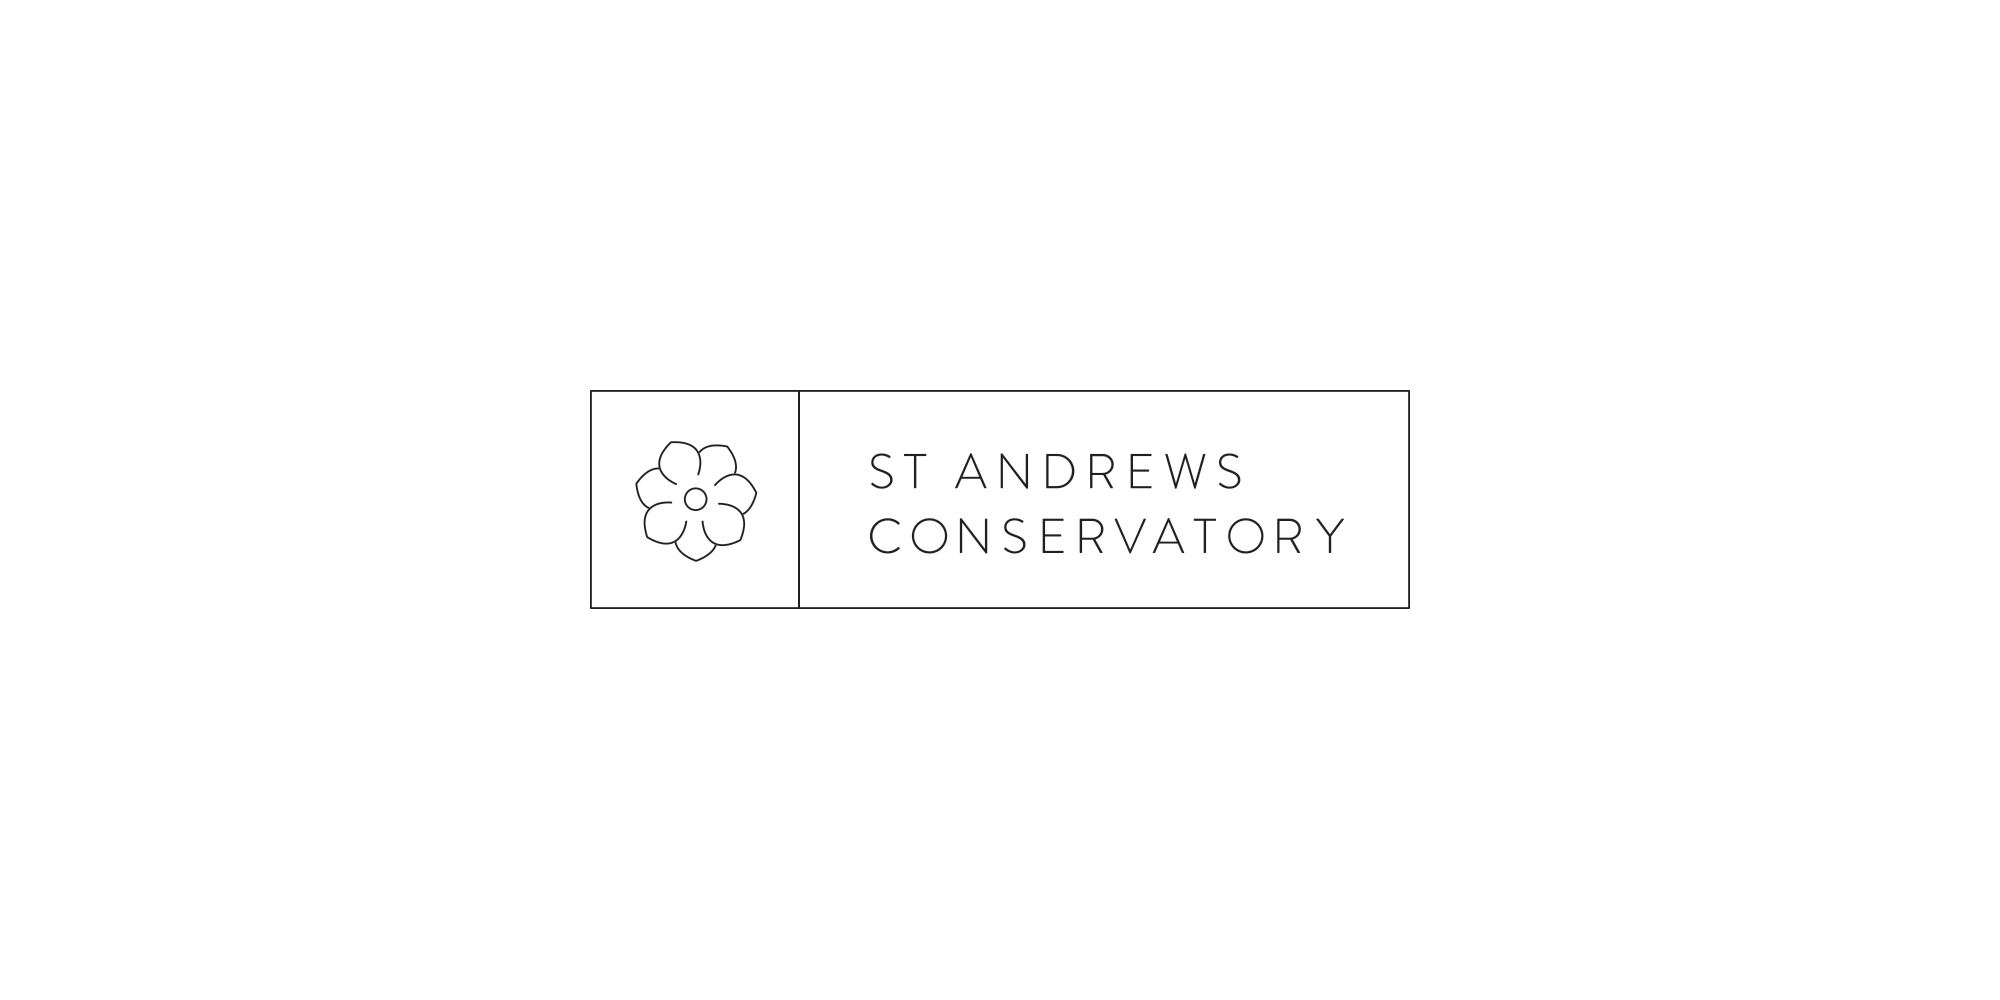 St Andrews Conservatory - Branding